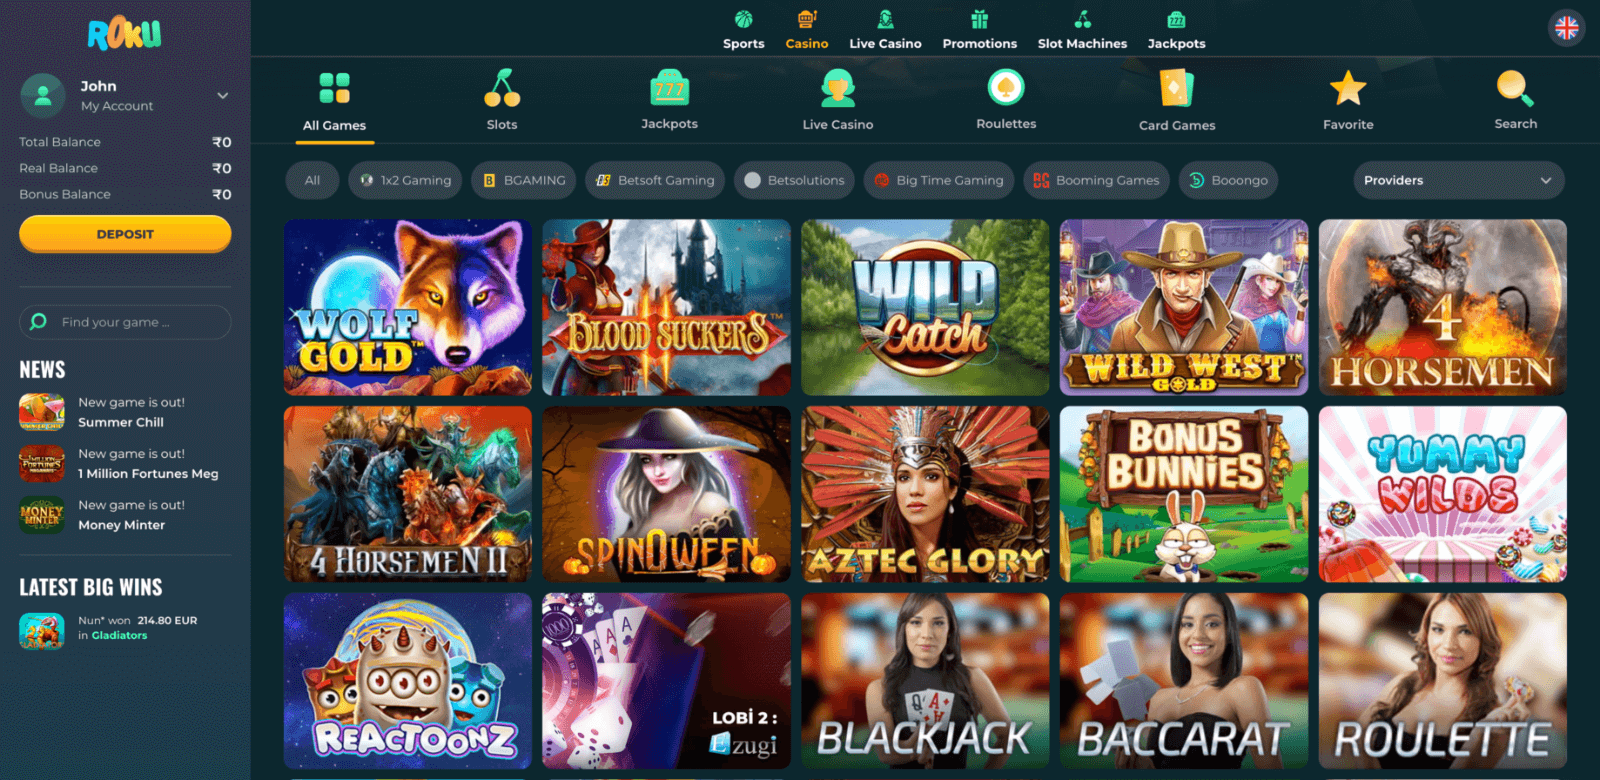 Online casino section on the Rokubet website